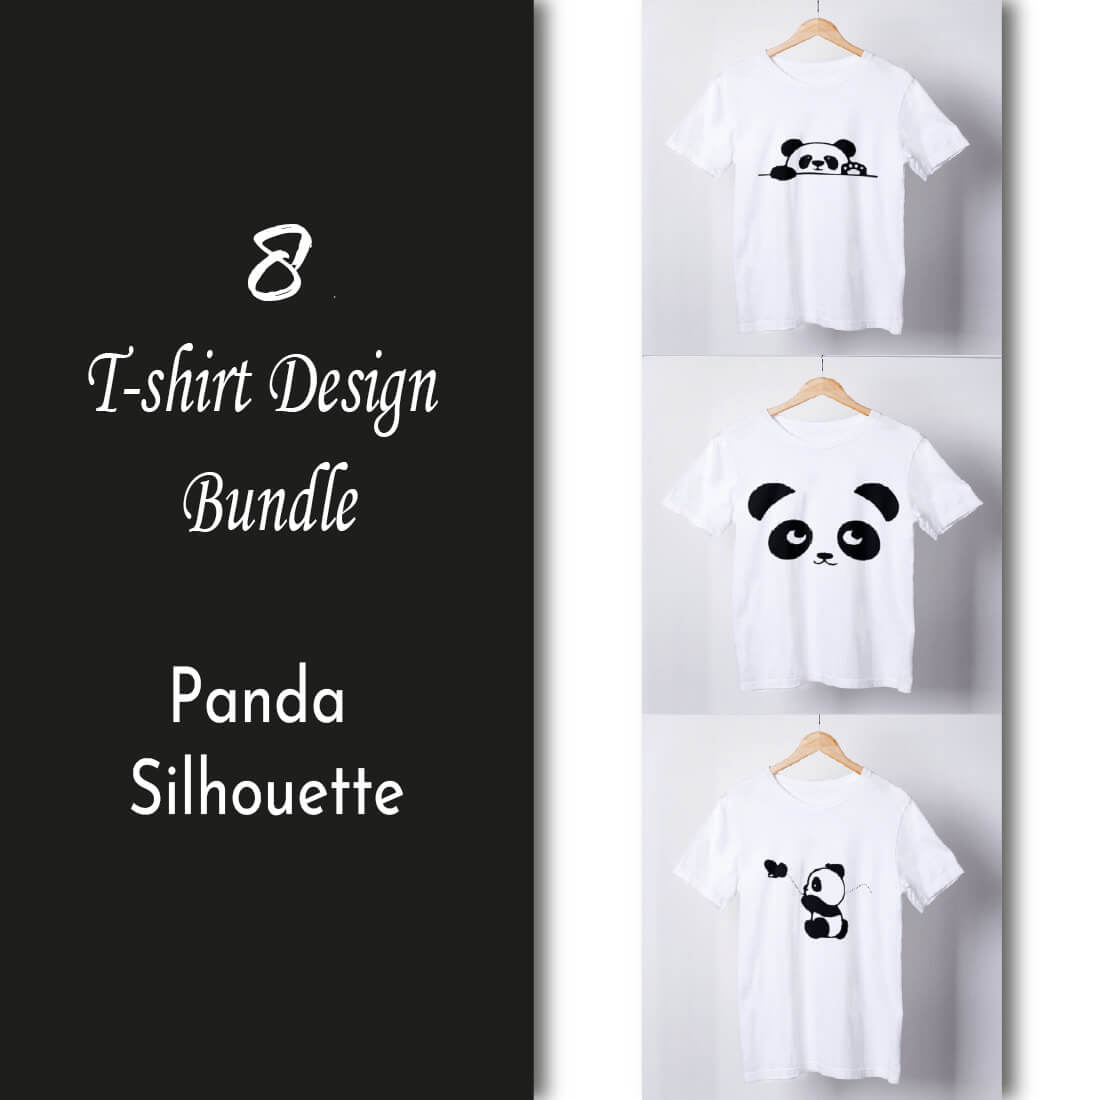 Panda T-shirt Design Graphics cover image.